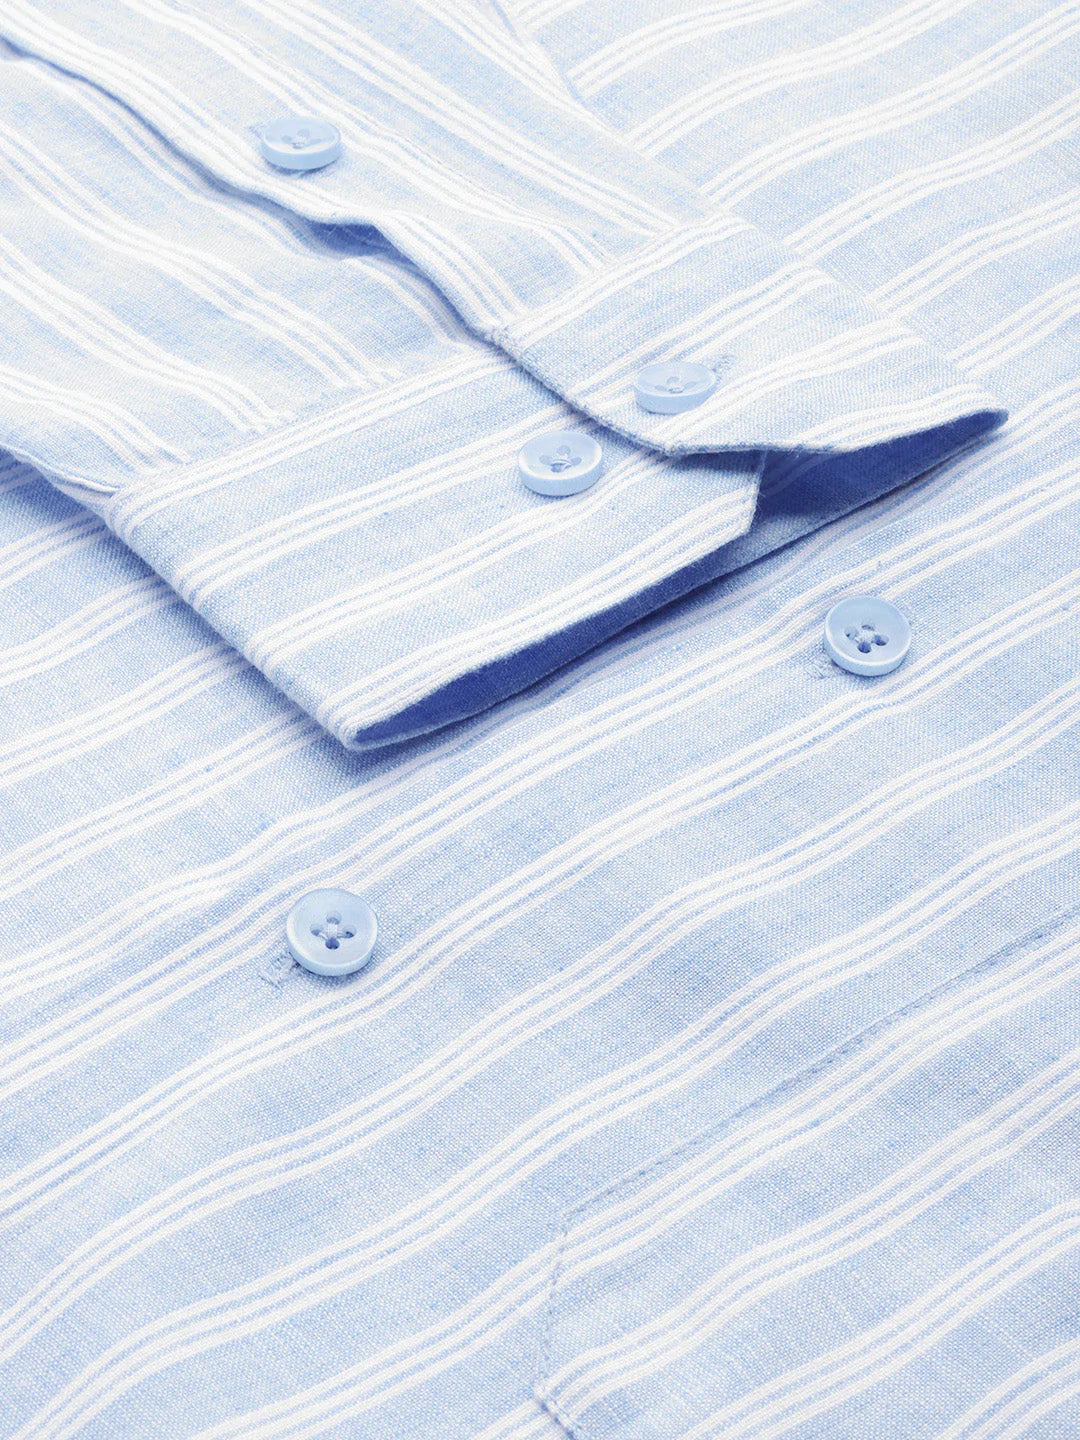 Jainish Men's  Cotton Striped Formal Shirts ( SF 795Light-Blue )